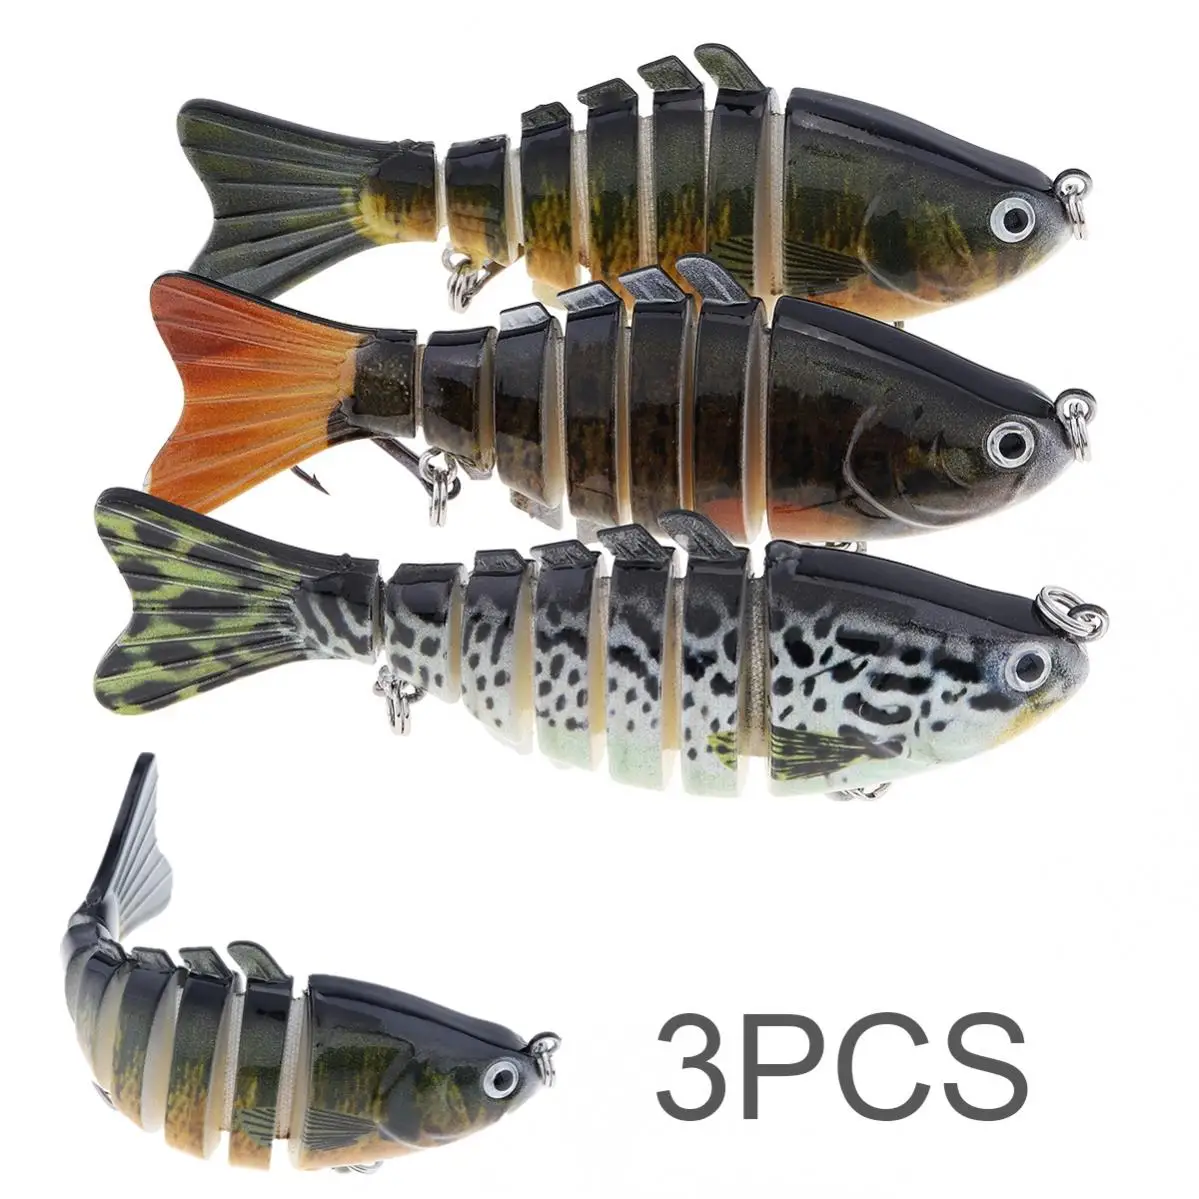 

3pcs 7 Segments Fishing Lures 10cm 15.5g Fish Minnow Swimbait Tackle Hook Crank Bait for Ocean Boat Fishing / Beach Fishing